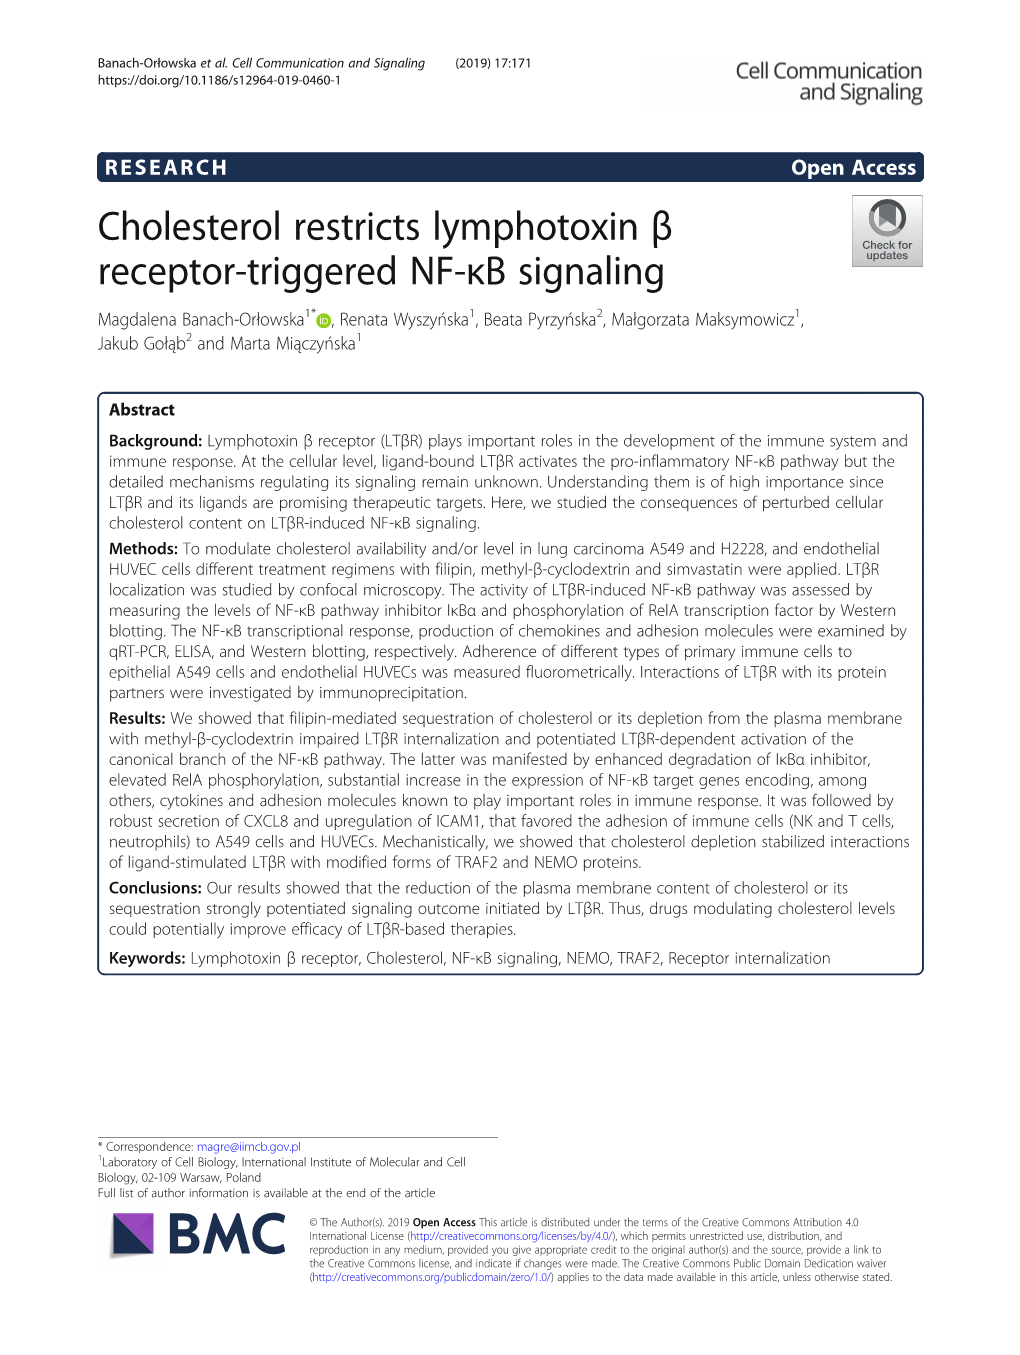 Cholesterol Restricts Lymphotoxin Β Receptor-Triggered NF-Κb Signaling